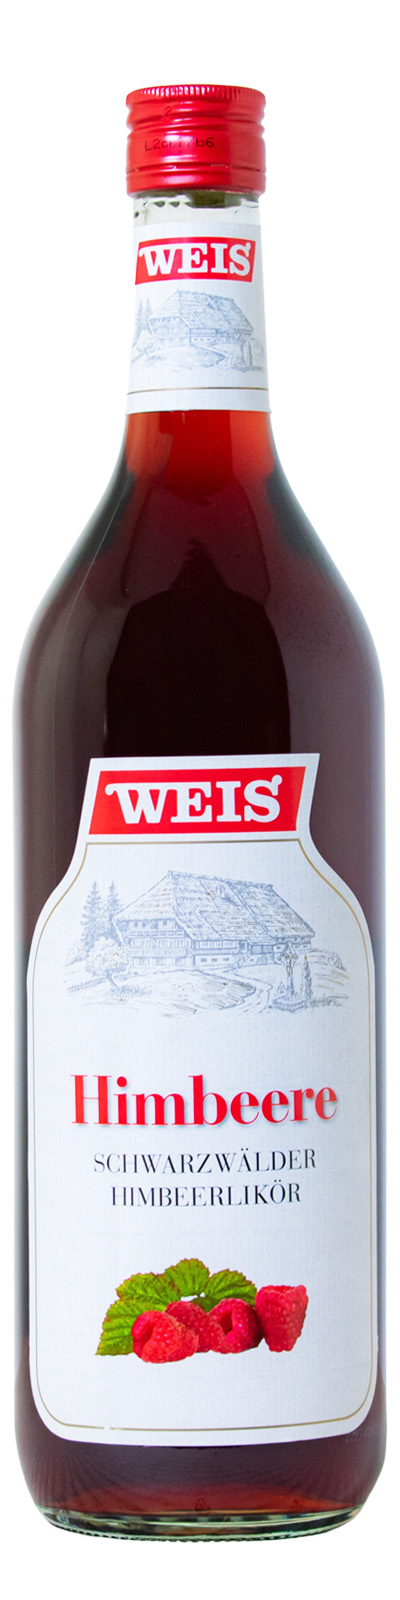 Weis Schwarzwälder Himbeere Likör - 1 Liter 20% vol